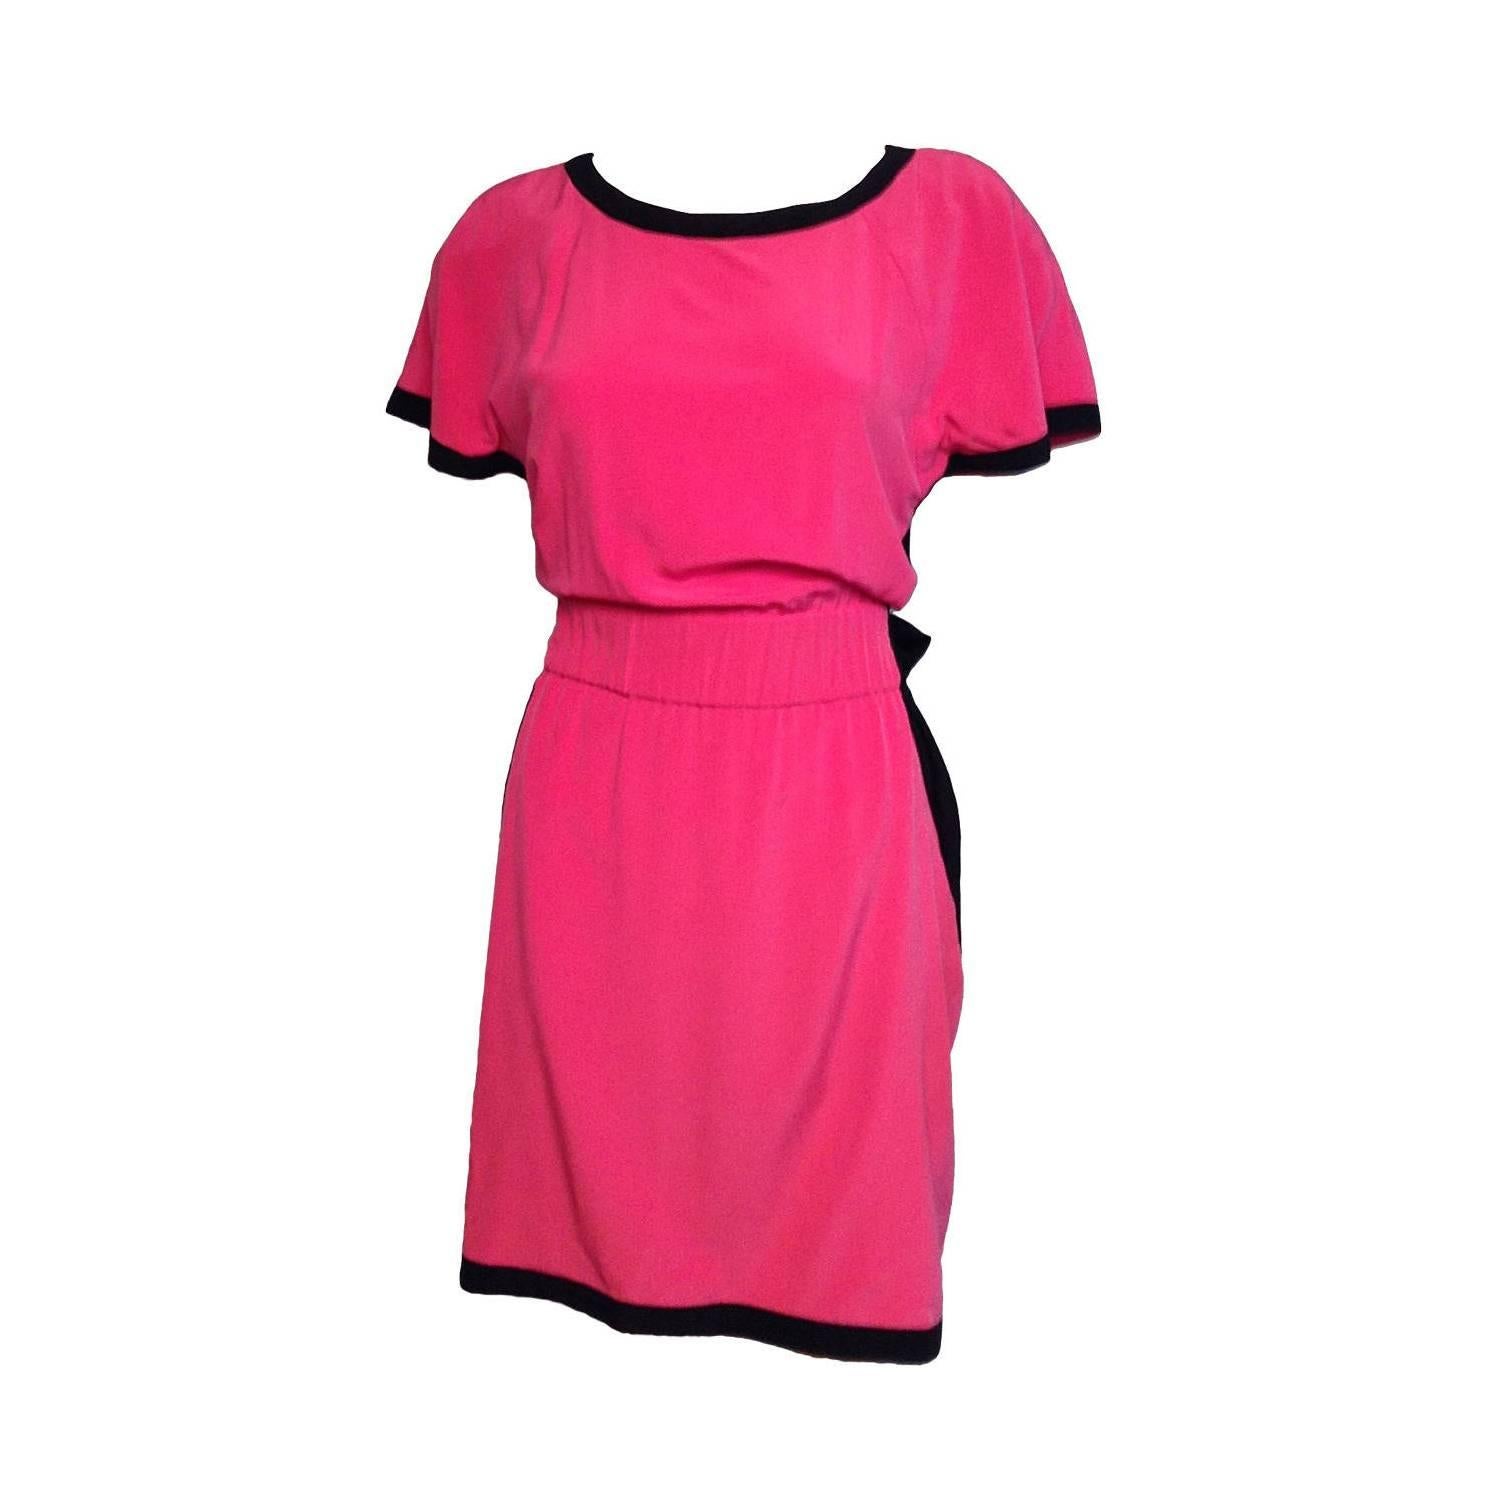 Karl Lagerfeld Black and Pink Vintage Dress Size 8 For Sale